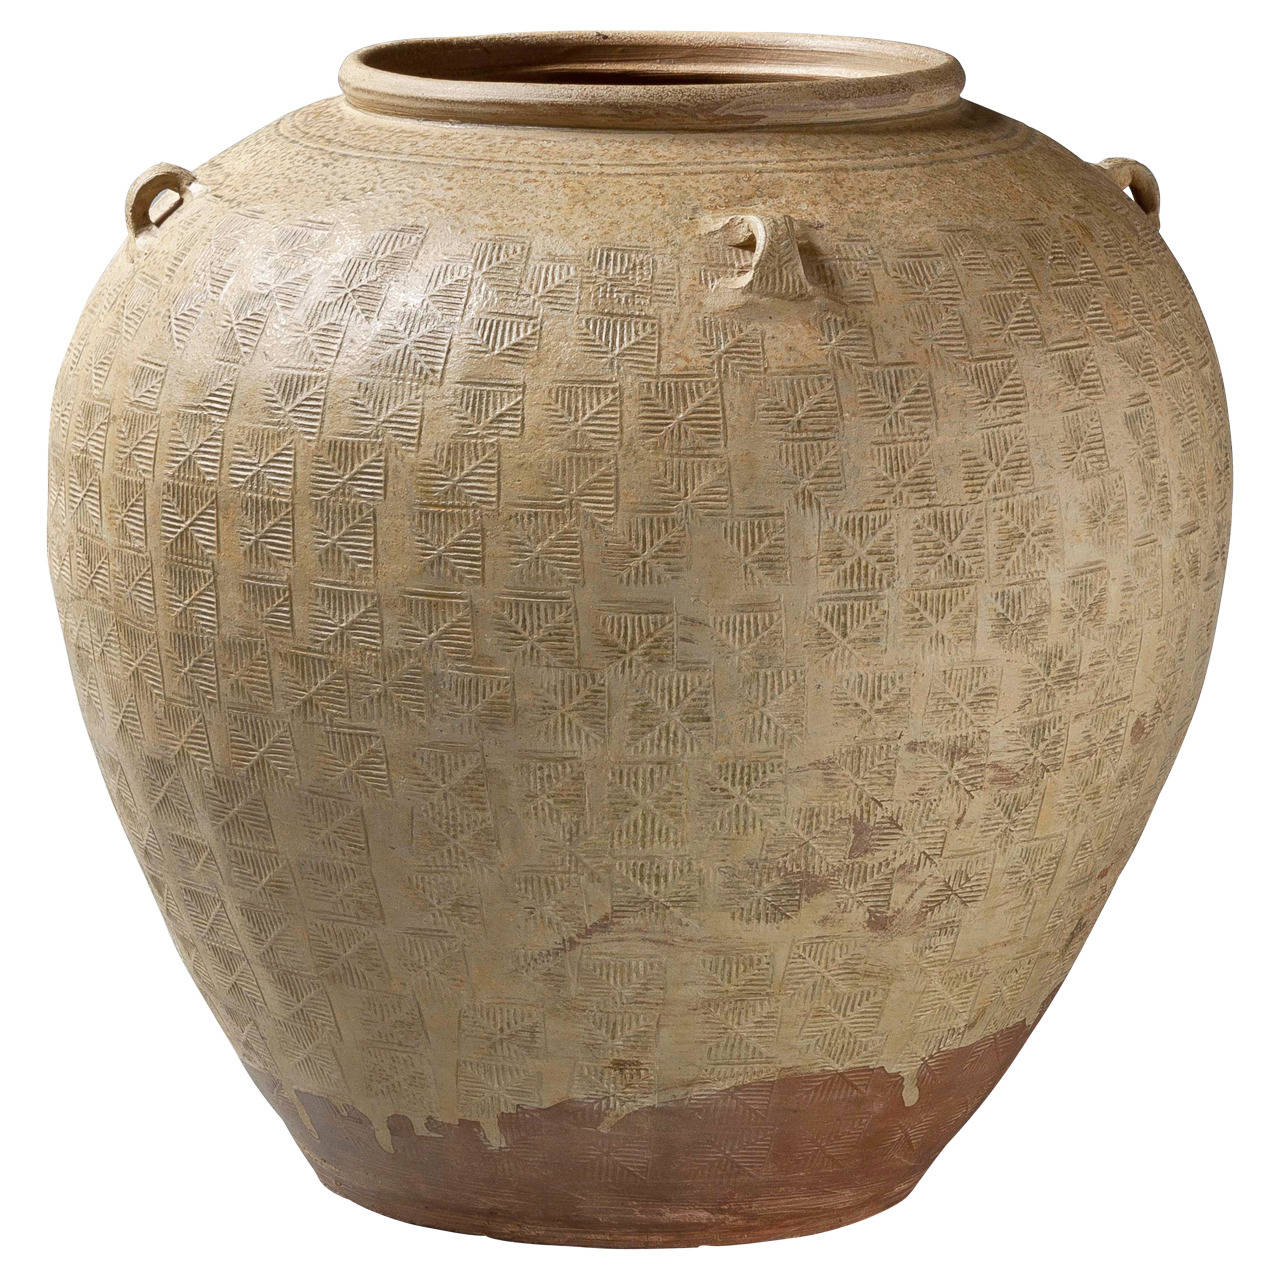 Eastern Han dynasty pottery jar, 2nd century AD